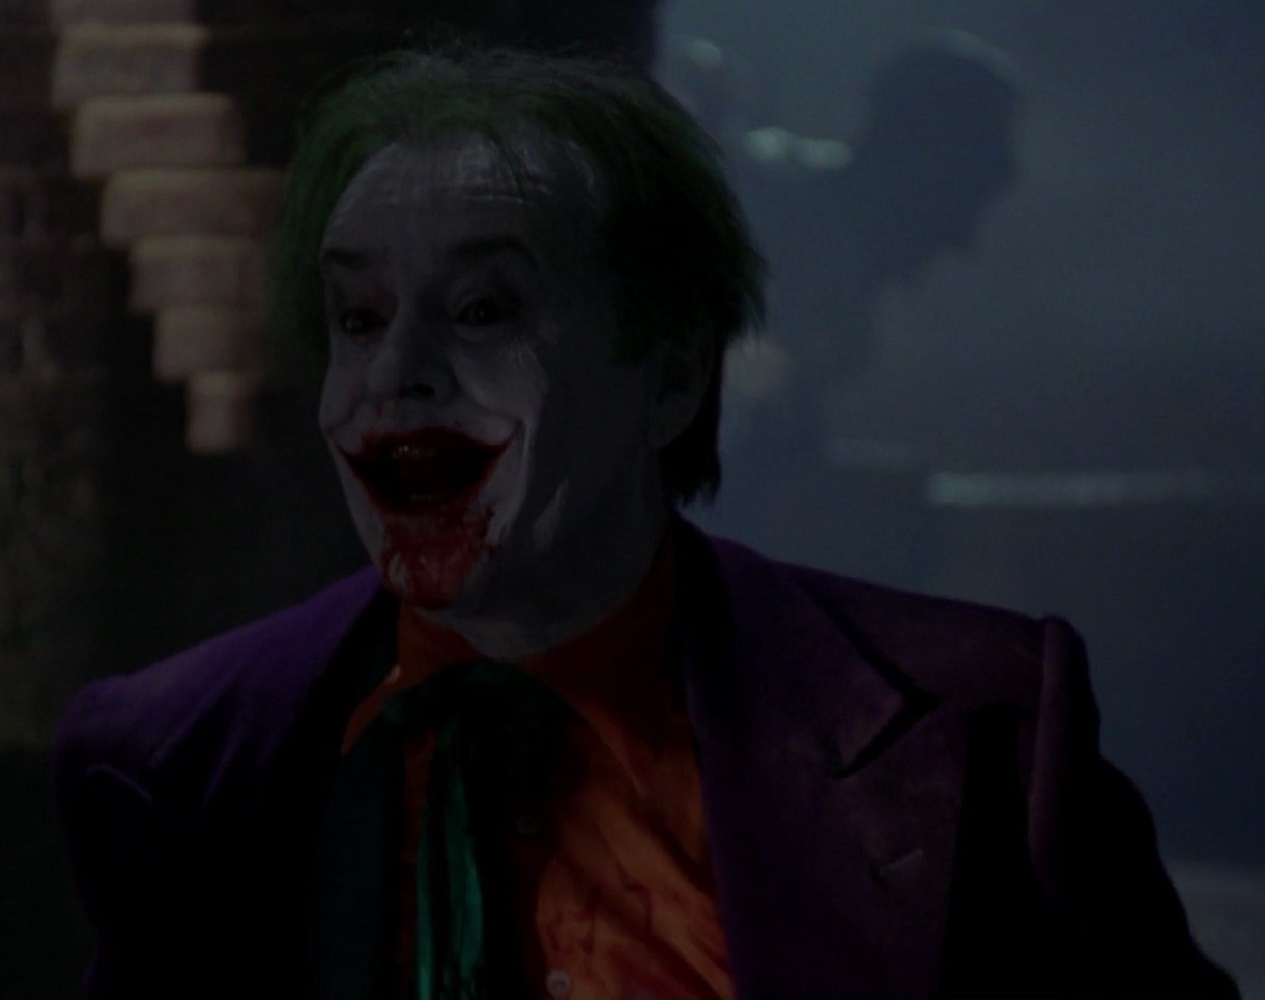 Joker costume - tailcoat